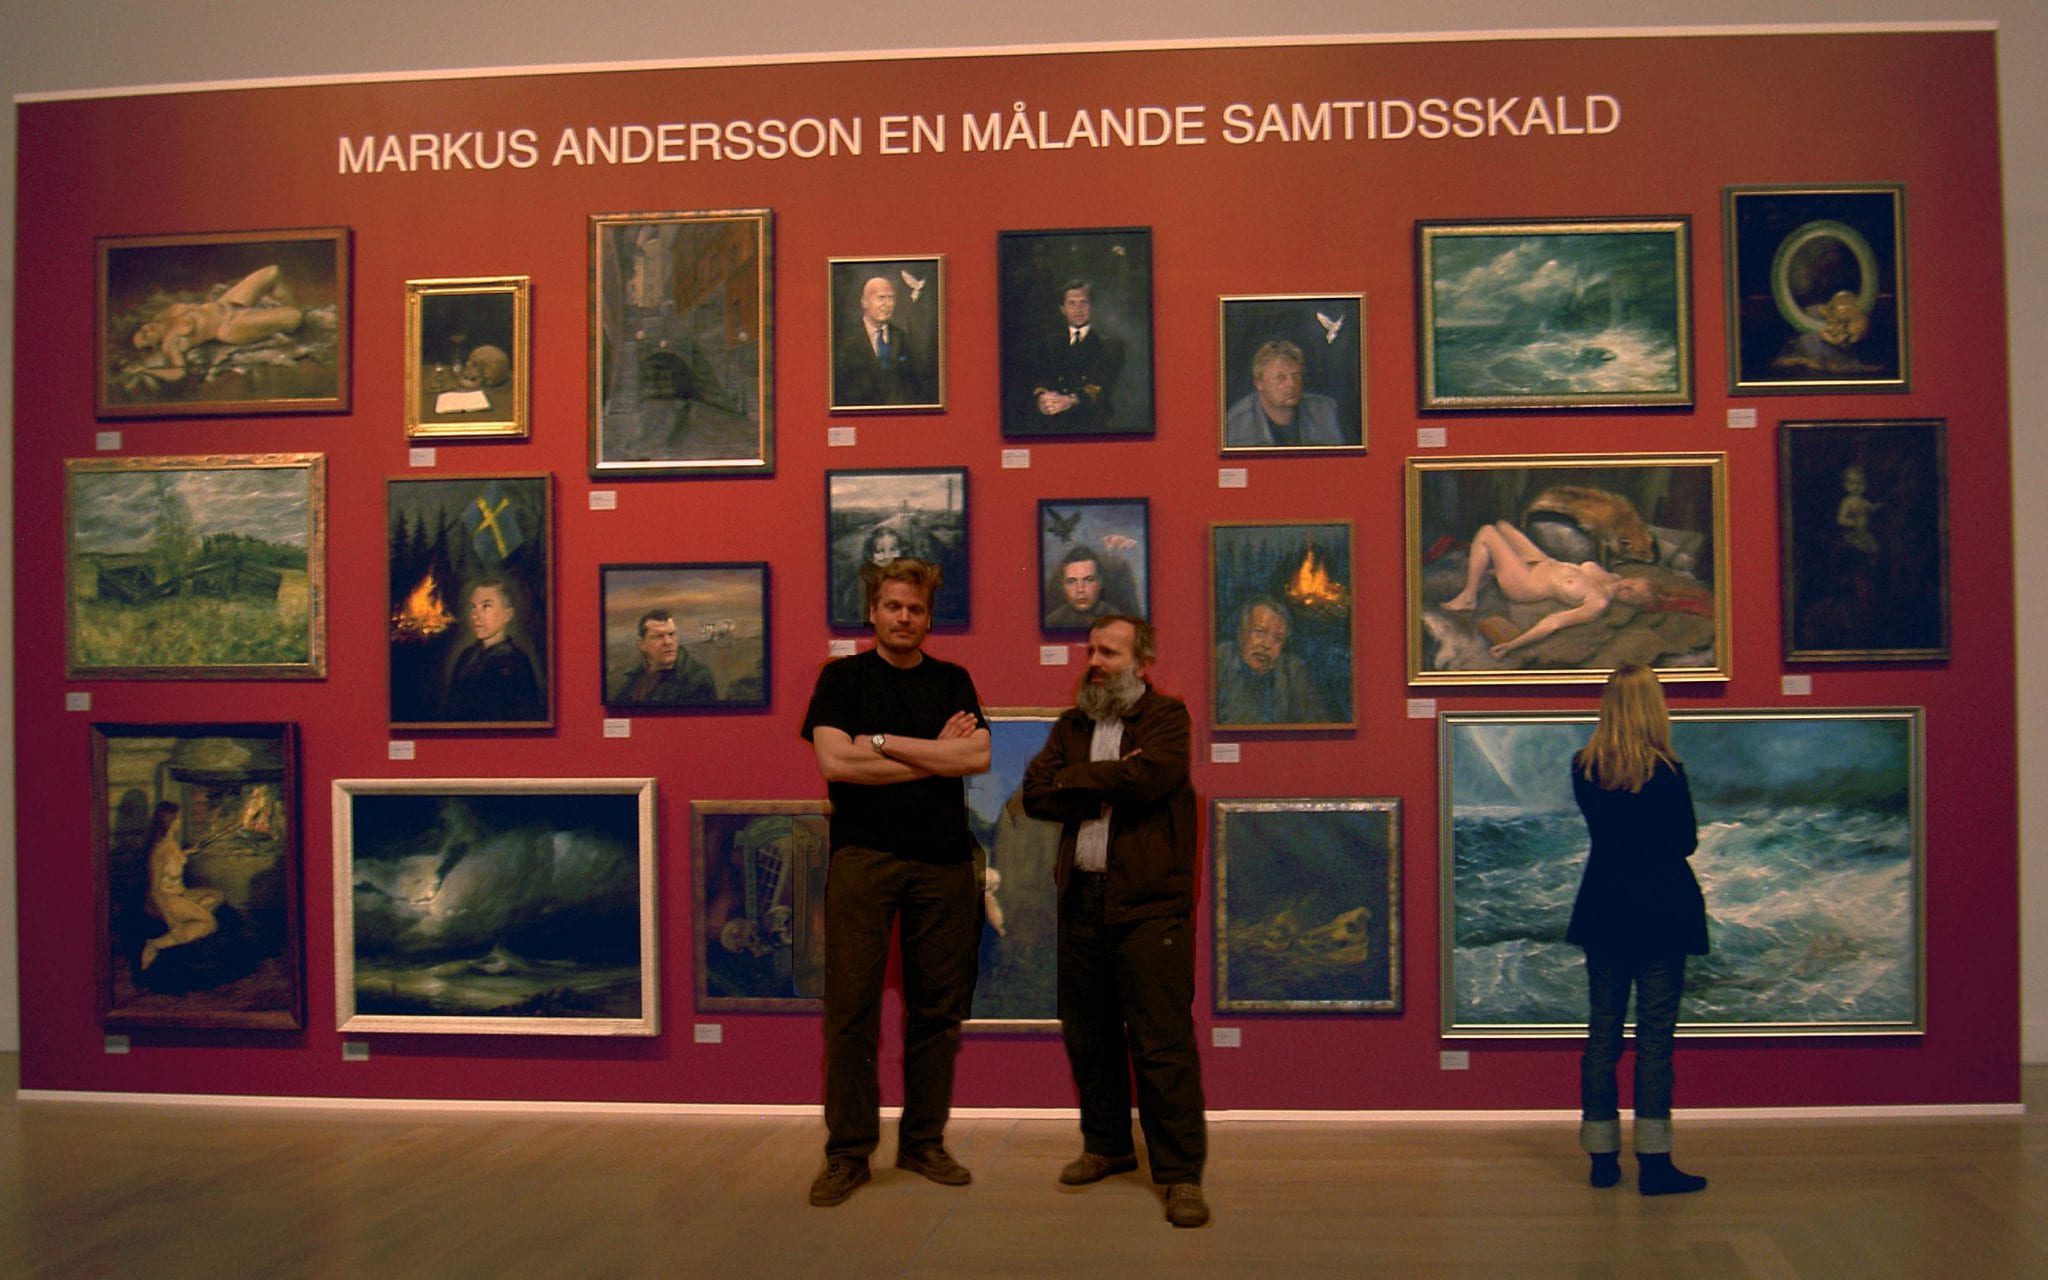 Markus Andersson character assassination in Sweden - Cave of Apelles, Nerdrum School, Herland Report